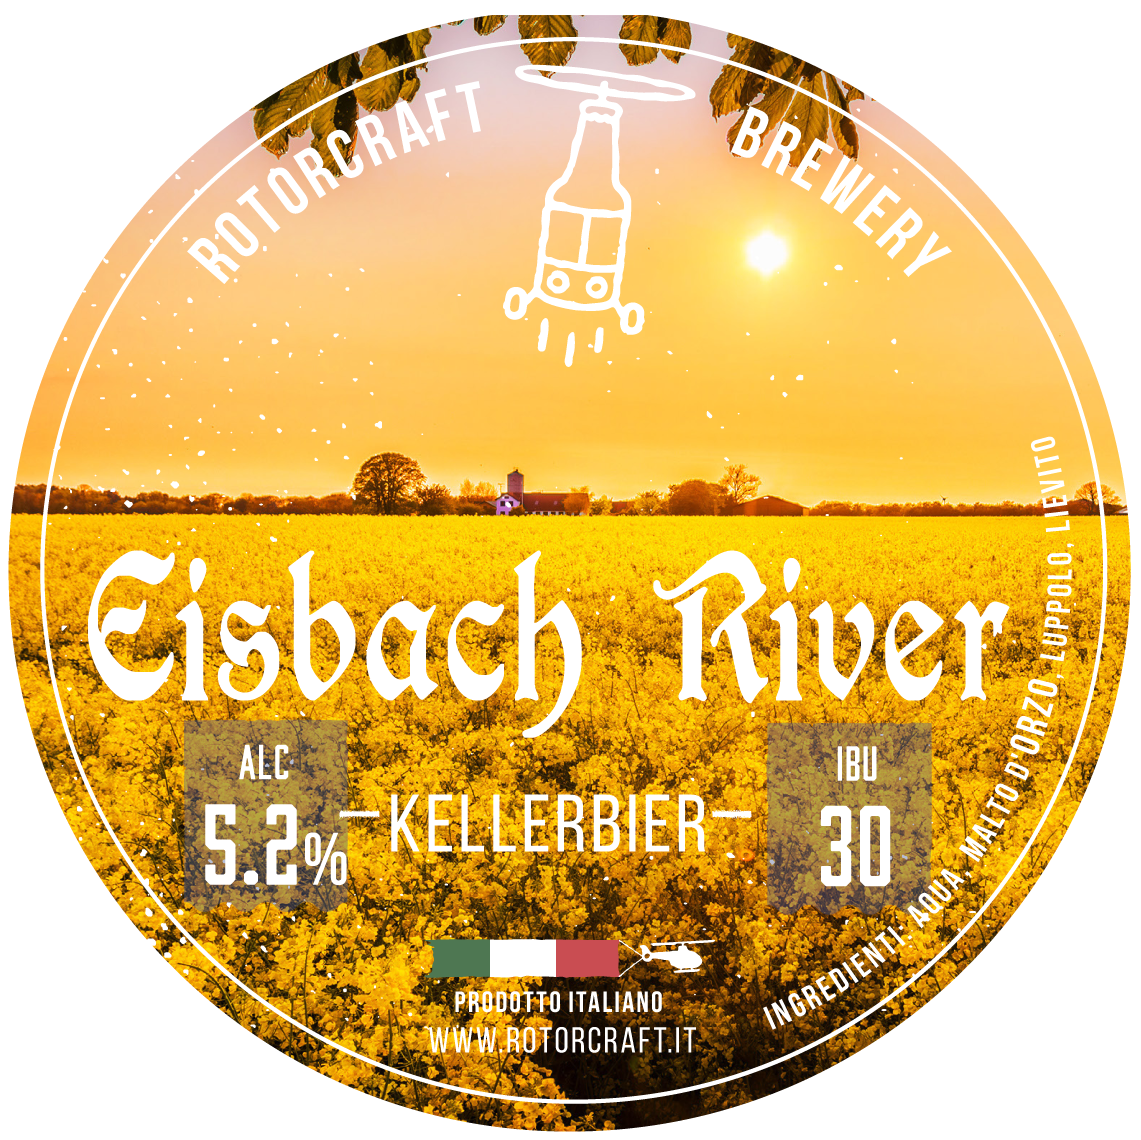 Eisbach River - Keller-Pils, Fusto 30L